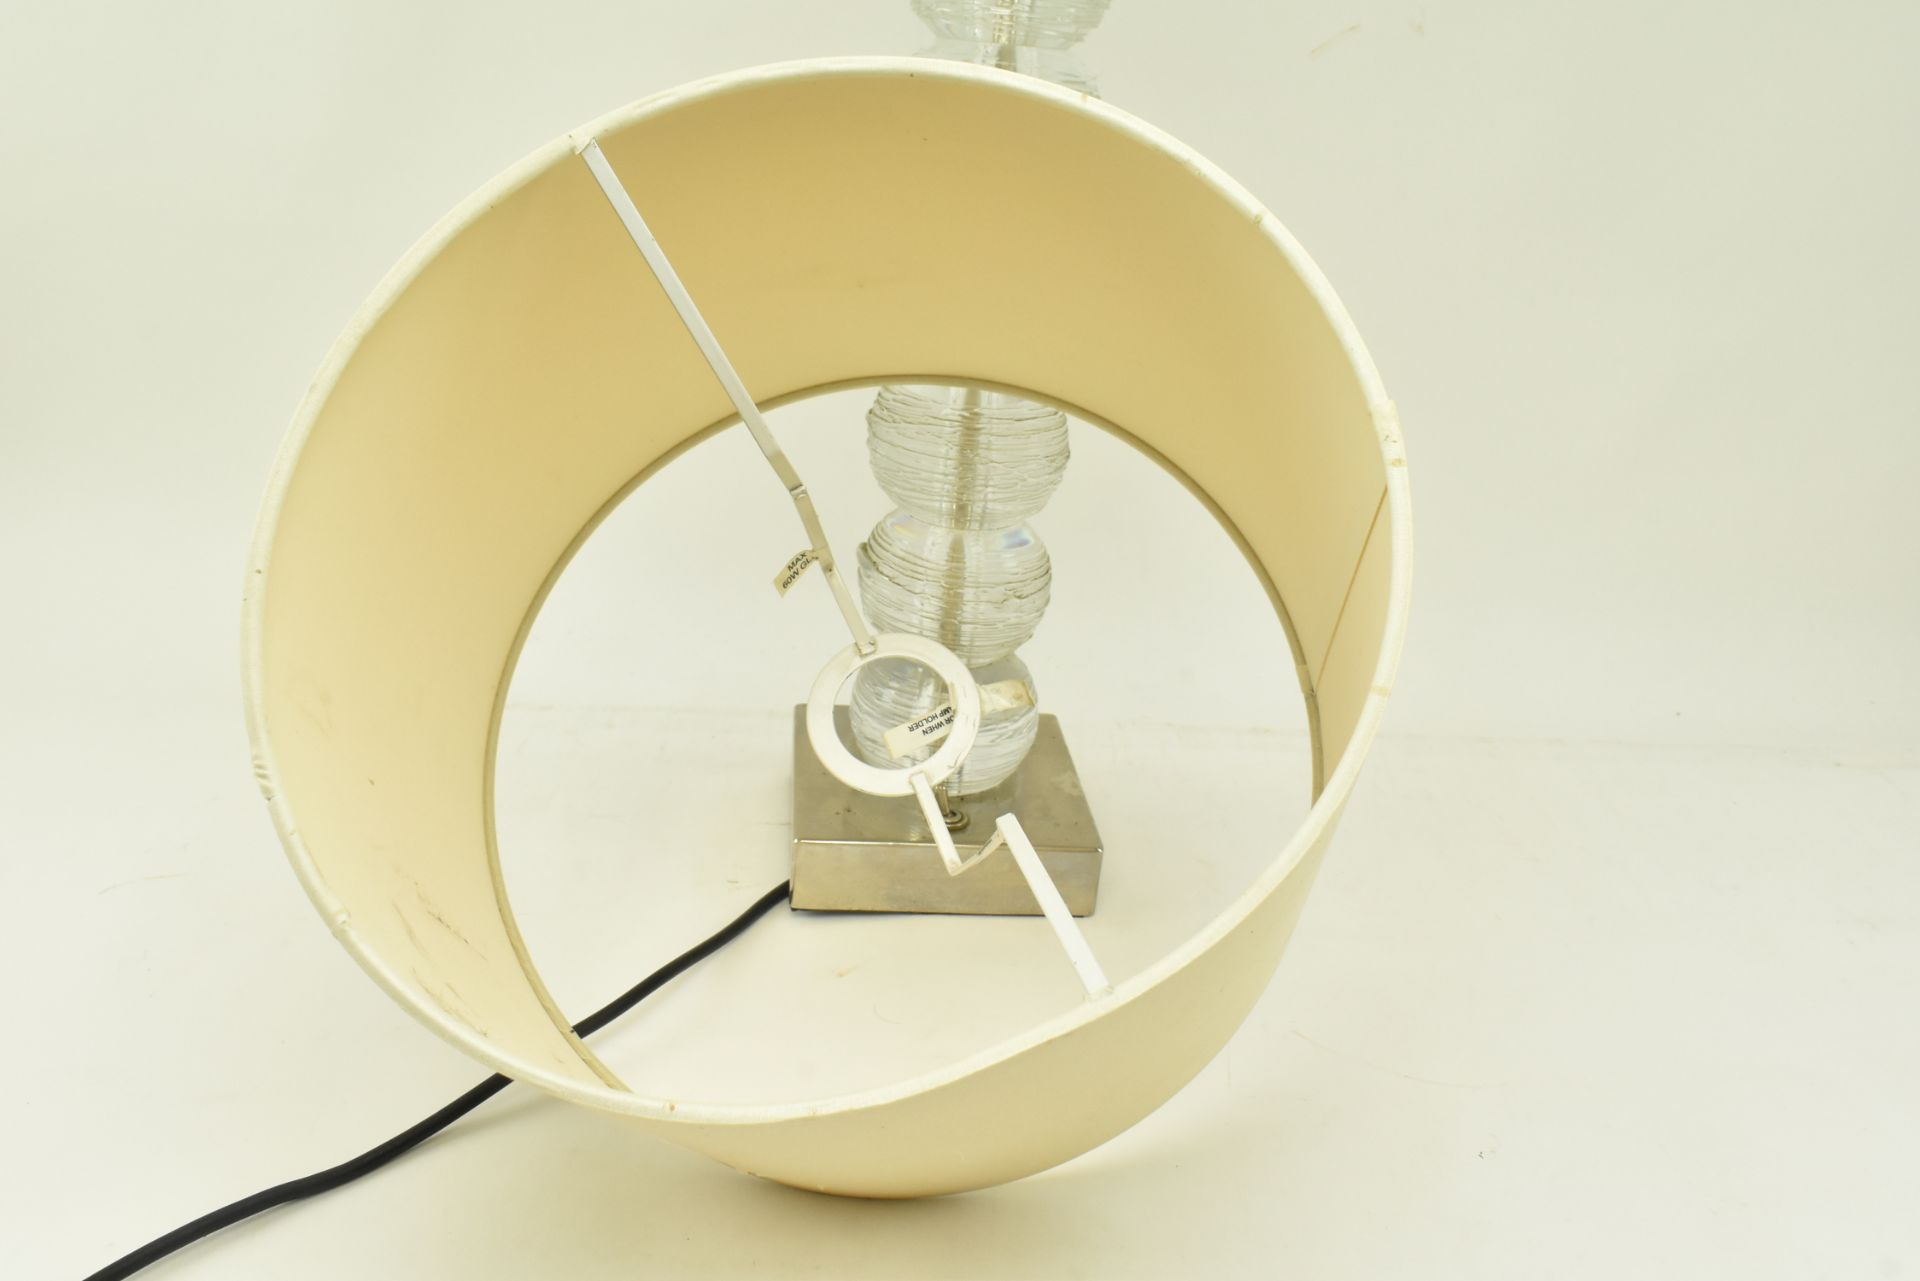 PORTA ROMANA - PAIR OF SPUN CLEAR GLASS DESK LAMPS - Image 8 of 8